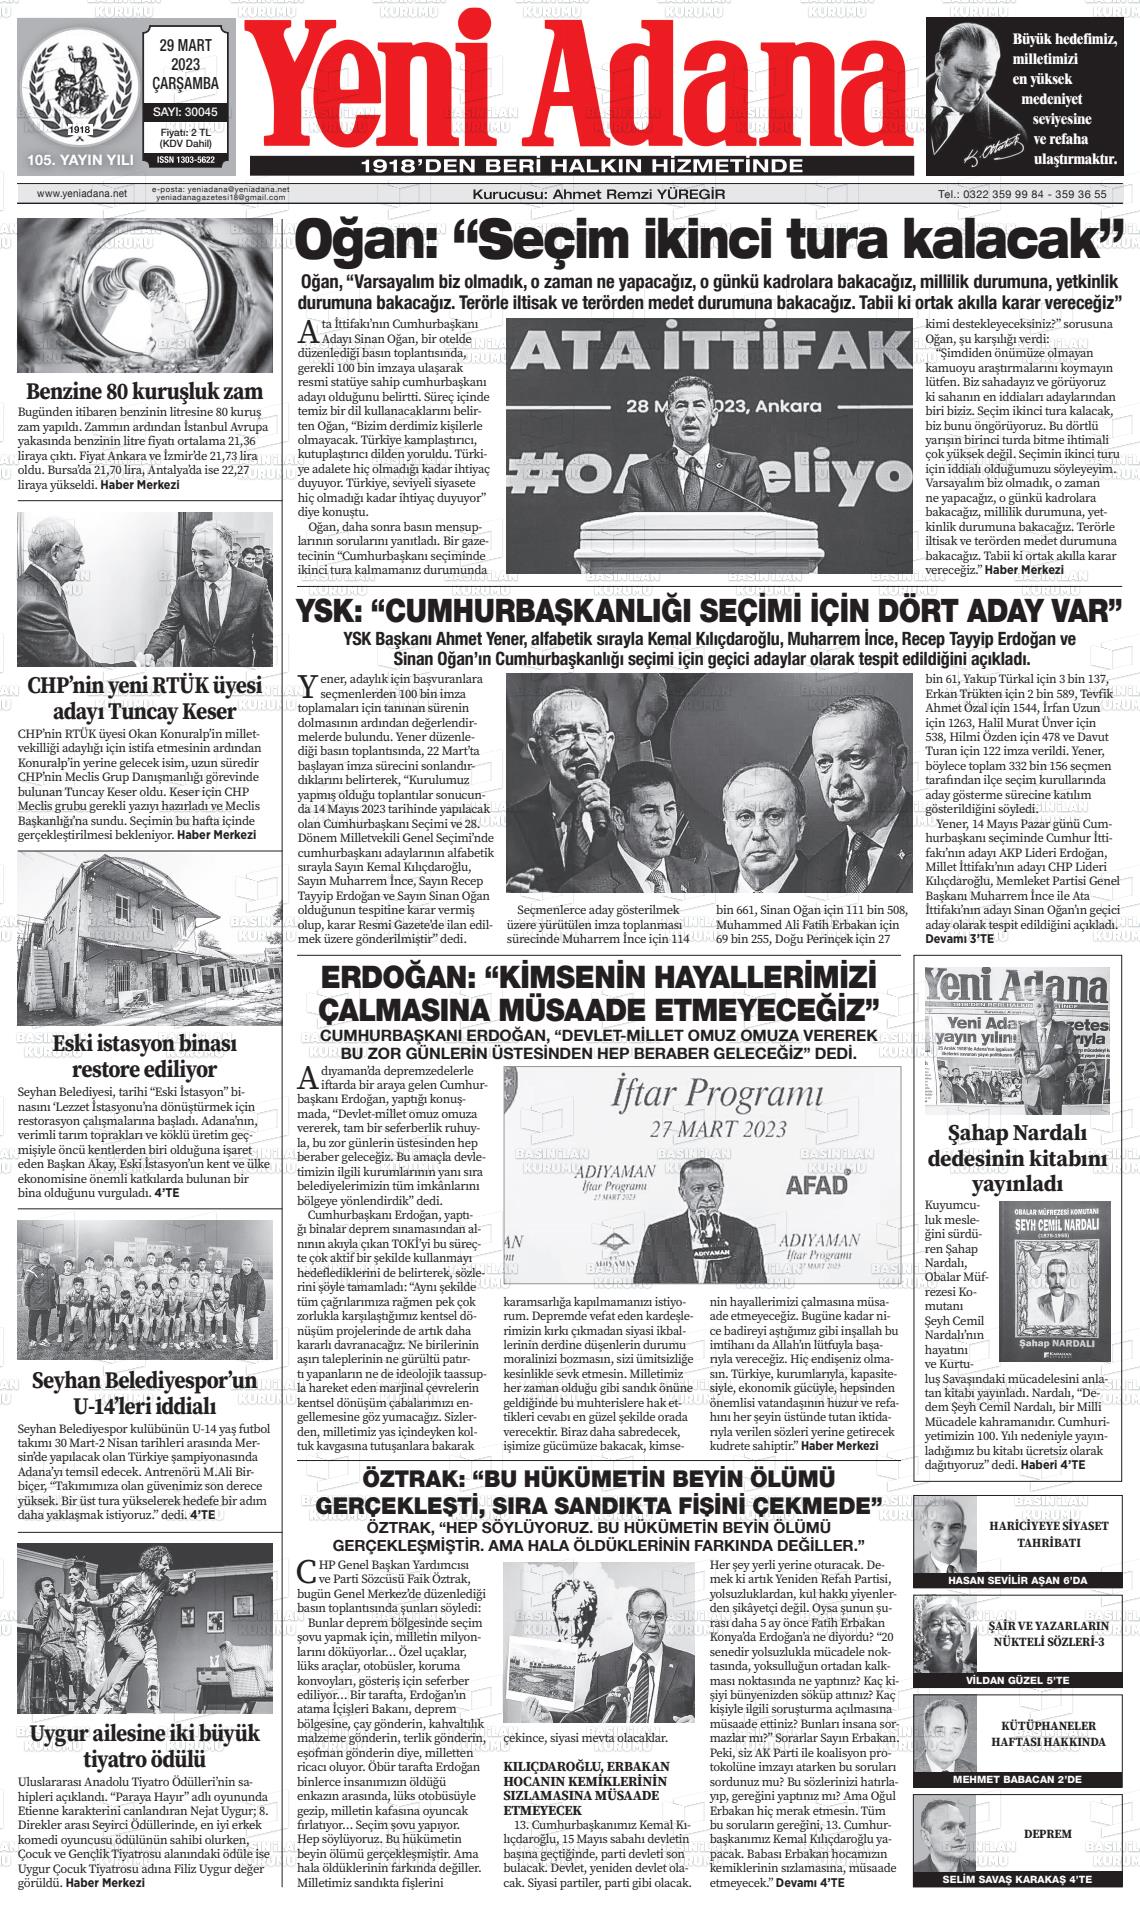 29 Mart 2023 Yeni Adana Gazete Manşeti